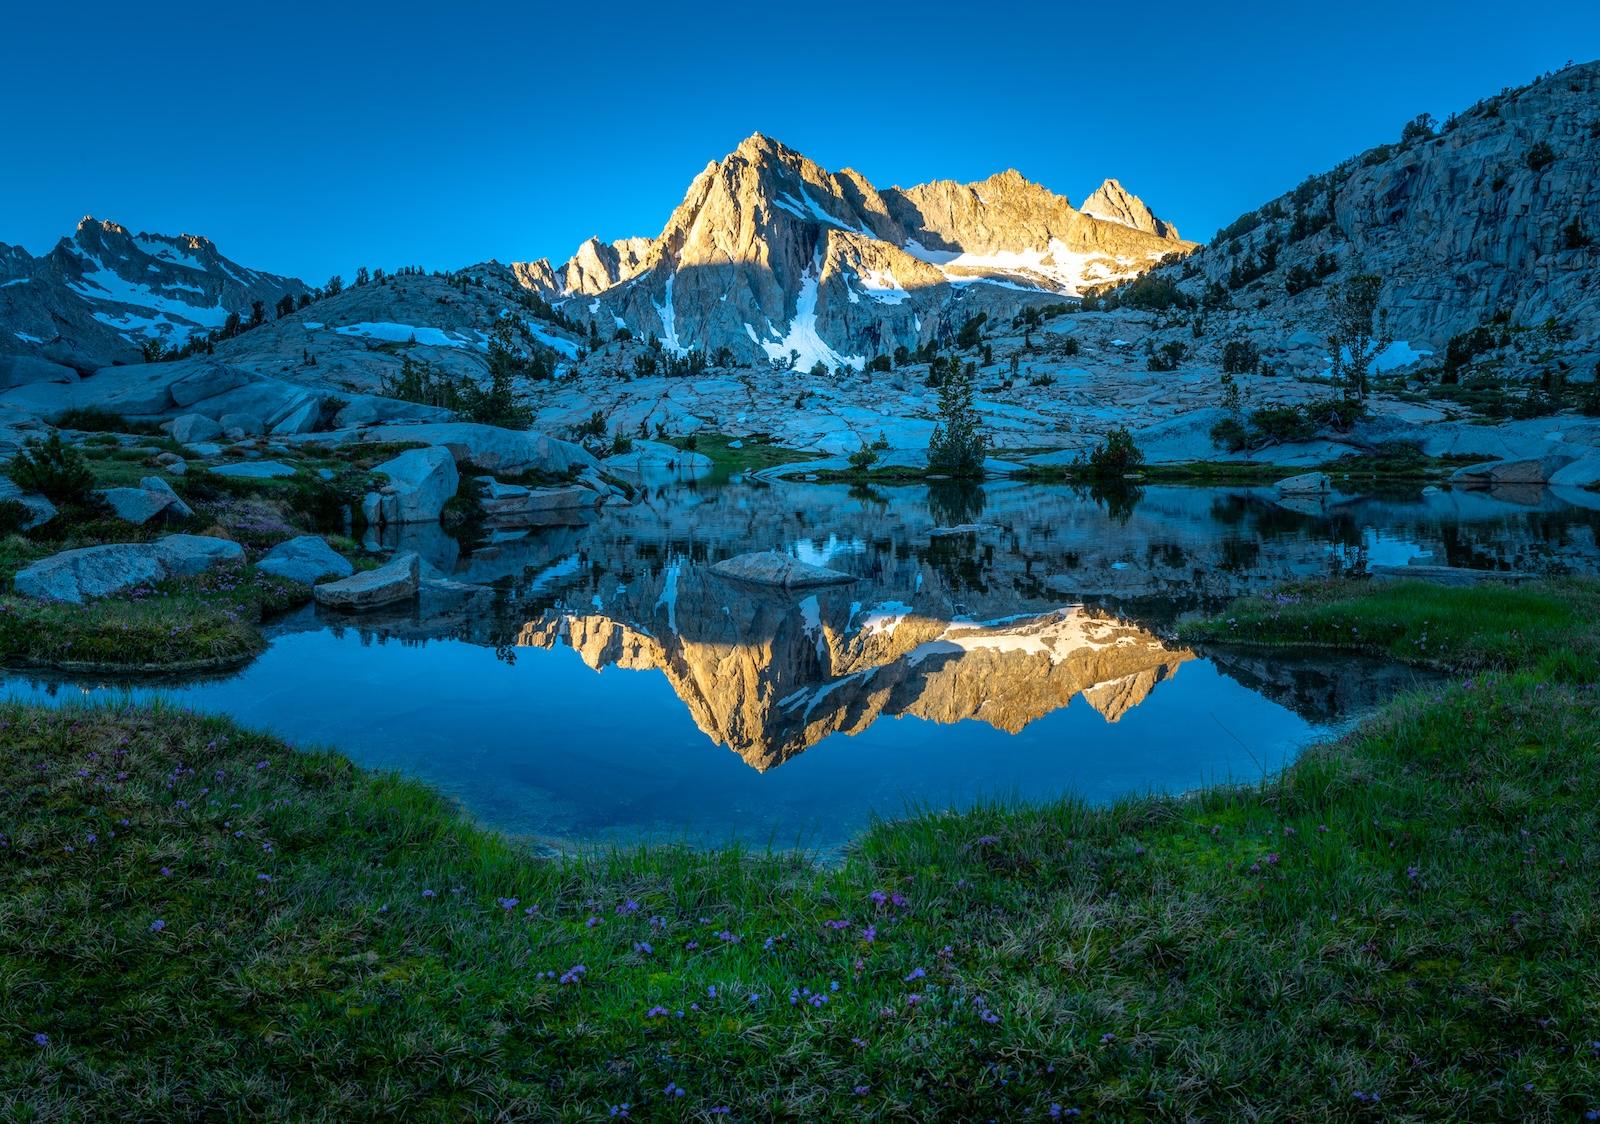 A granite peak reflecting in an alpine tarn in the Sabrina Basin of the Eastern Sierra.  Photo by Brock Dallman